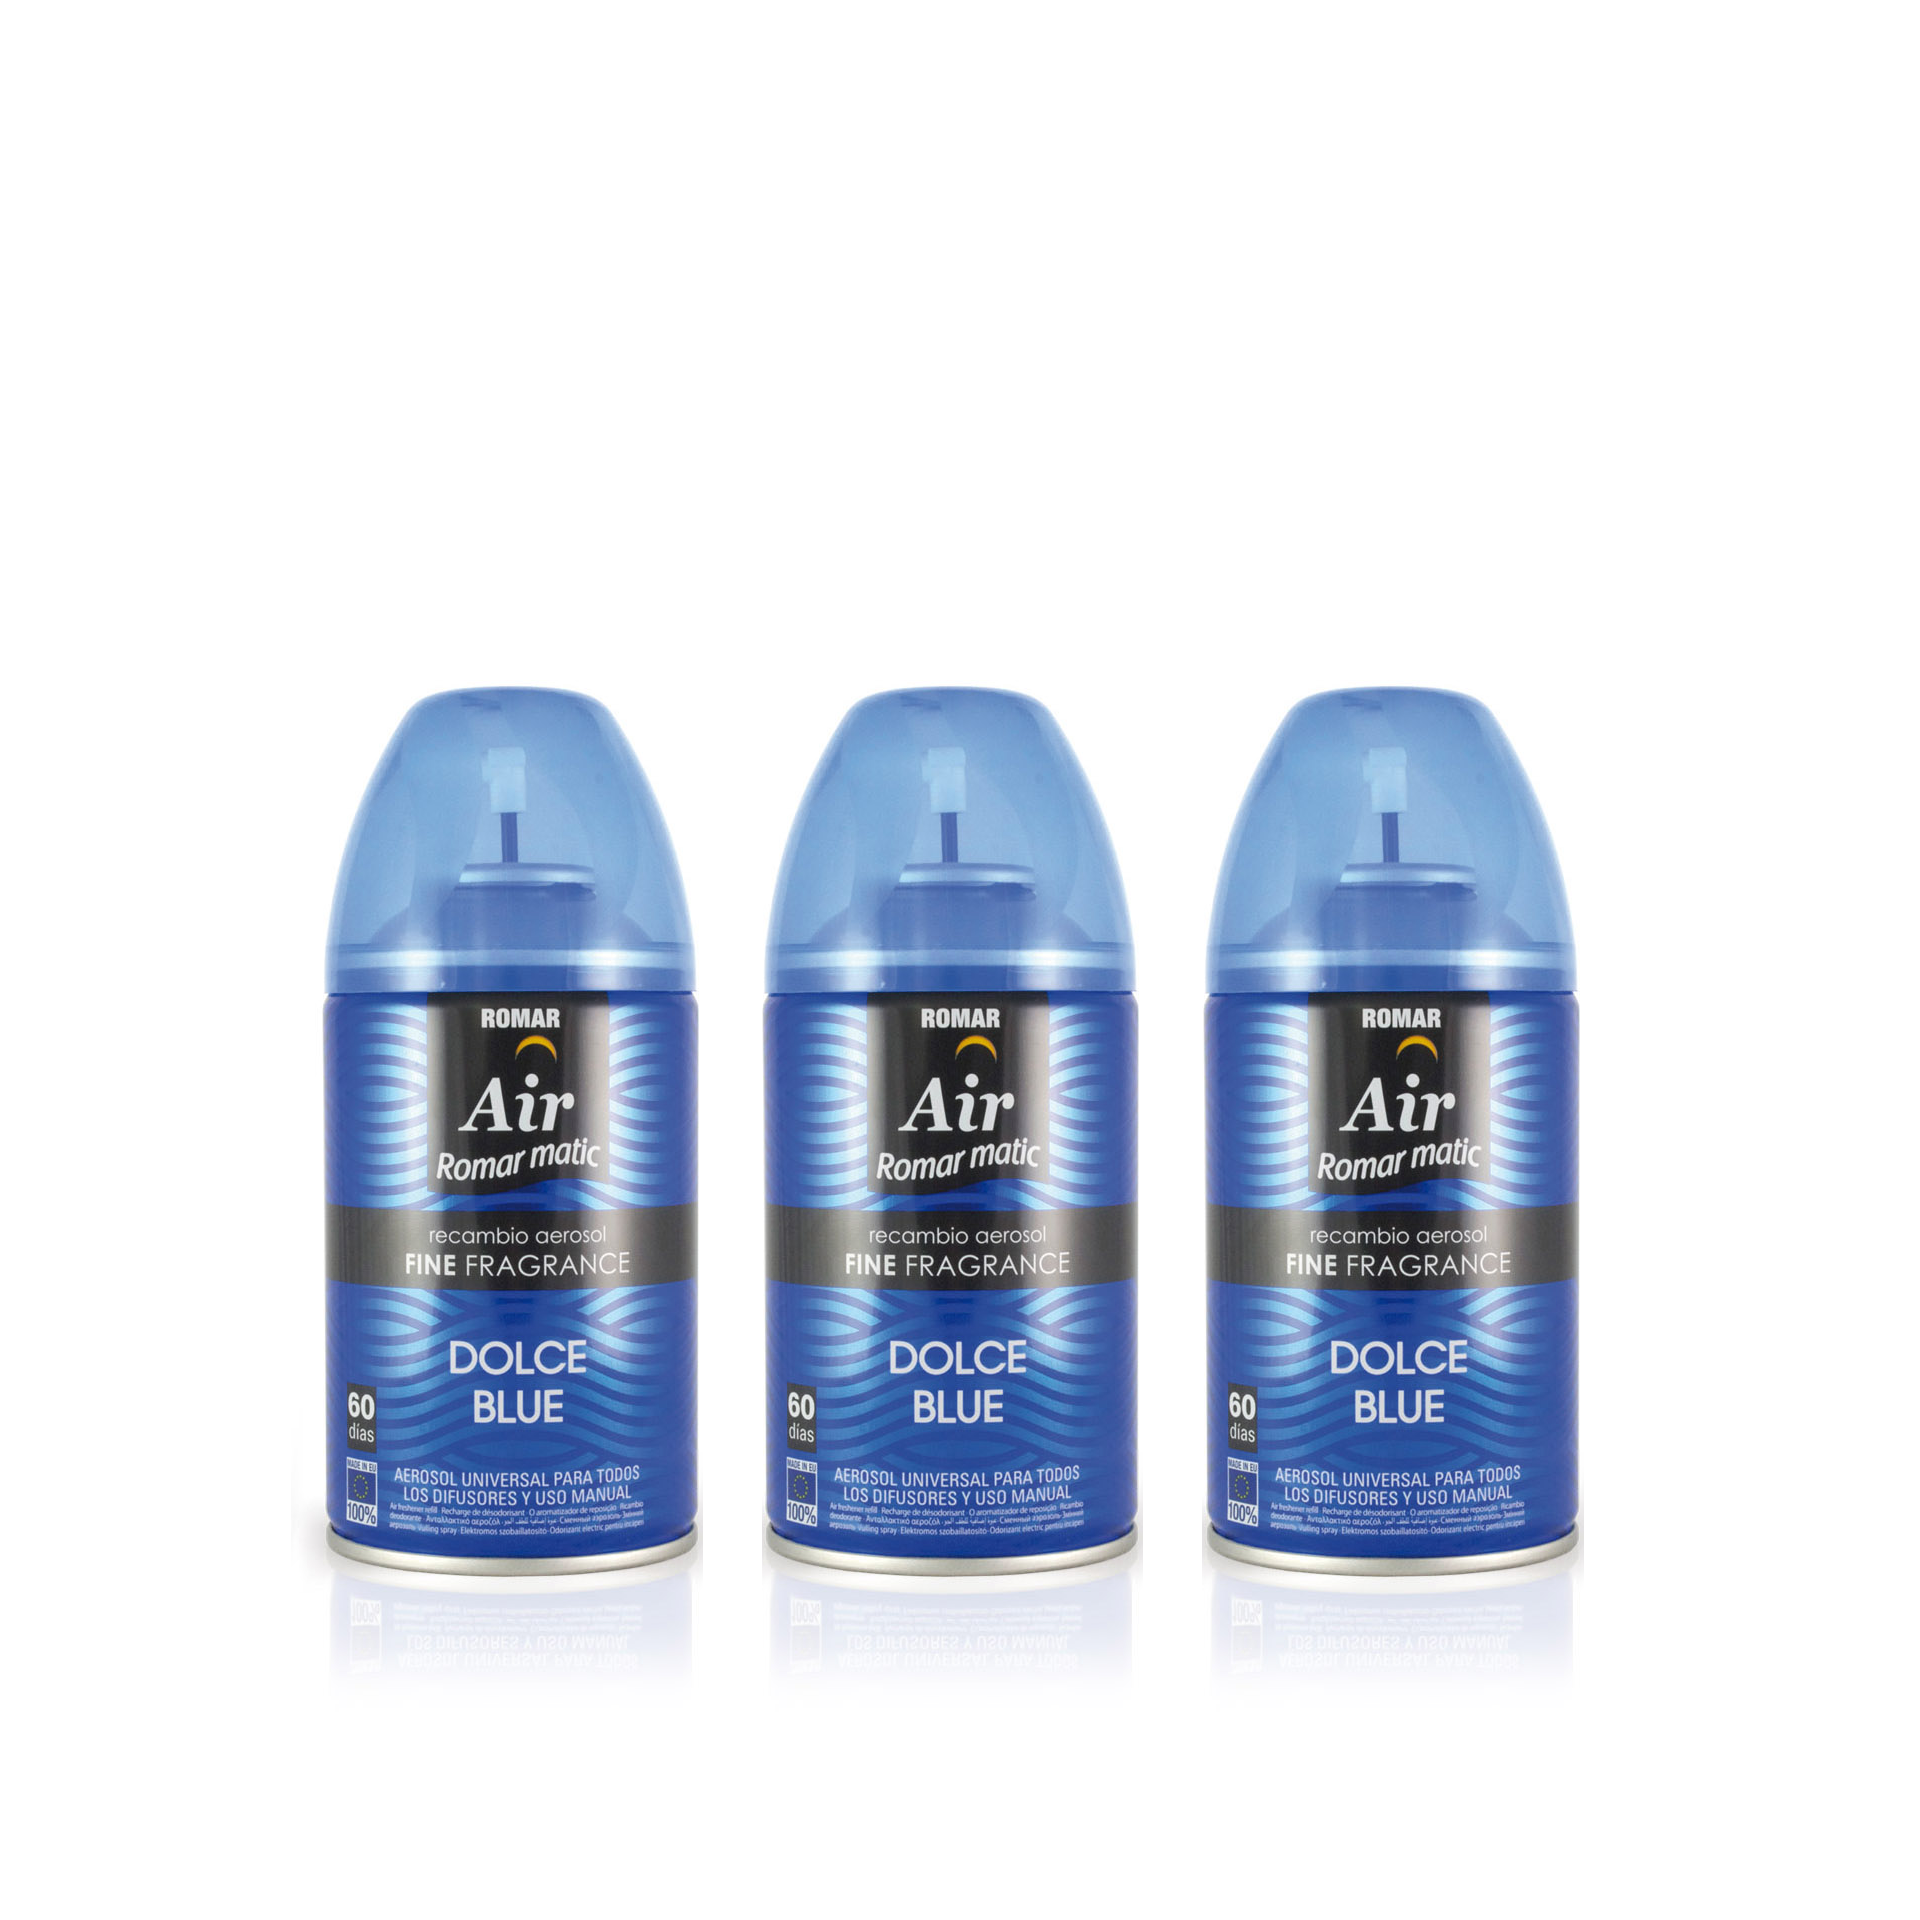 Romar Ambientador Spray Recarga Fine Fragance Dolce Blue 250 ml - Pack 3 x 250 ml